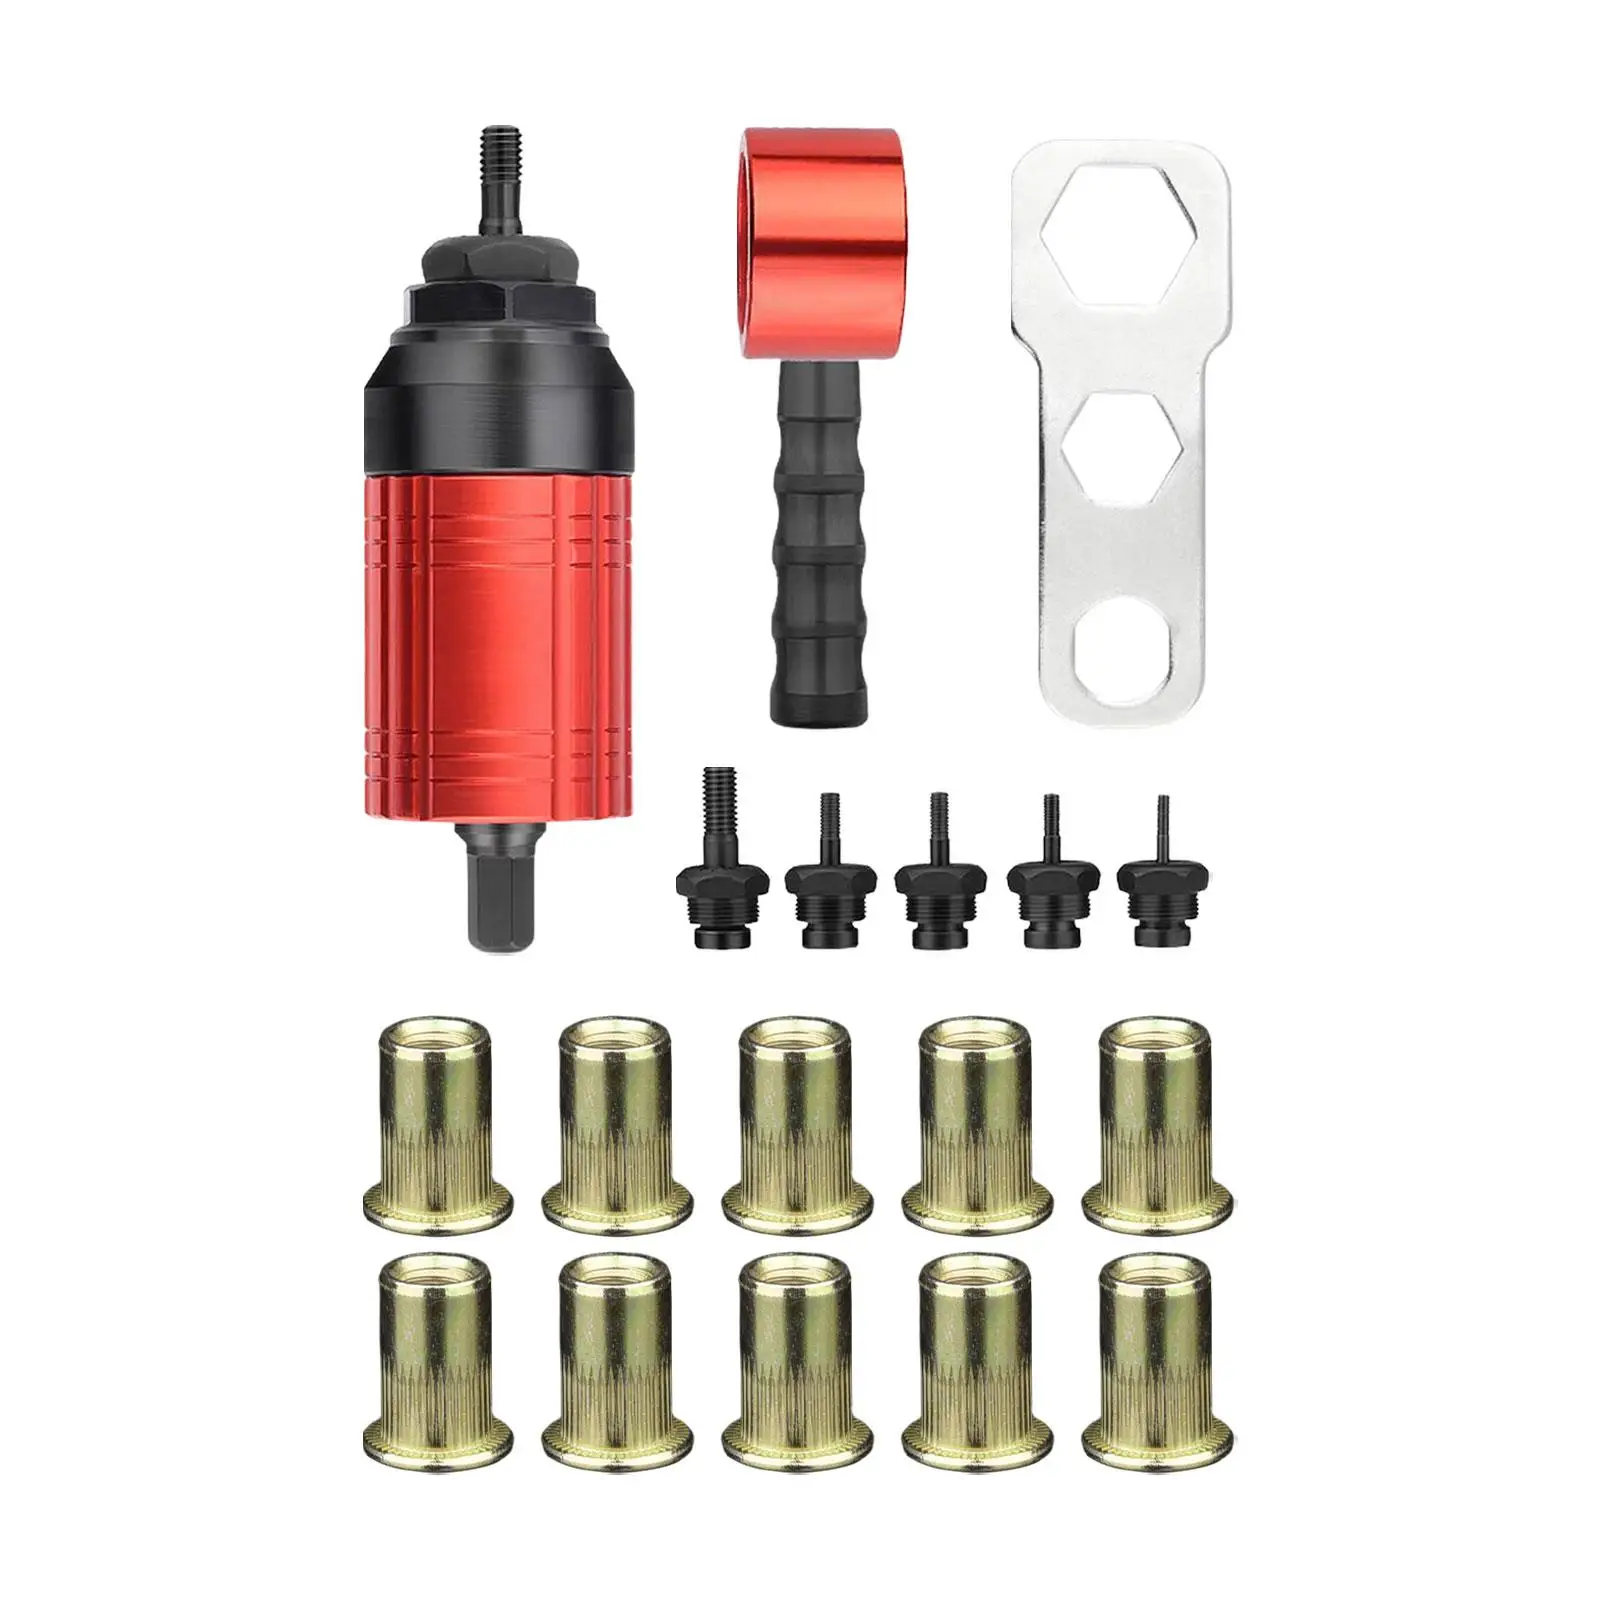 Rivet Nut Drill Adaptor Heavy Duty Threaded Insert Installation Tool Hand Riveter for Electrical Appliance Car Furniture Repair